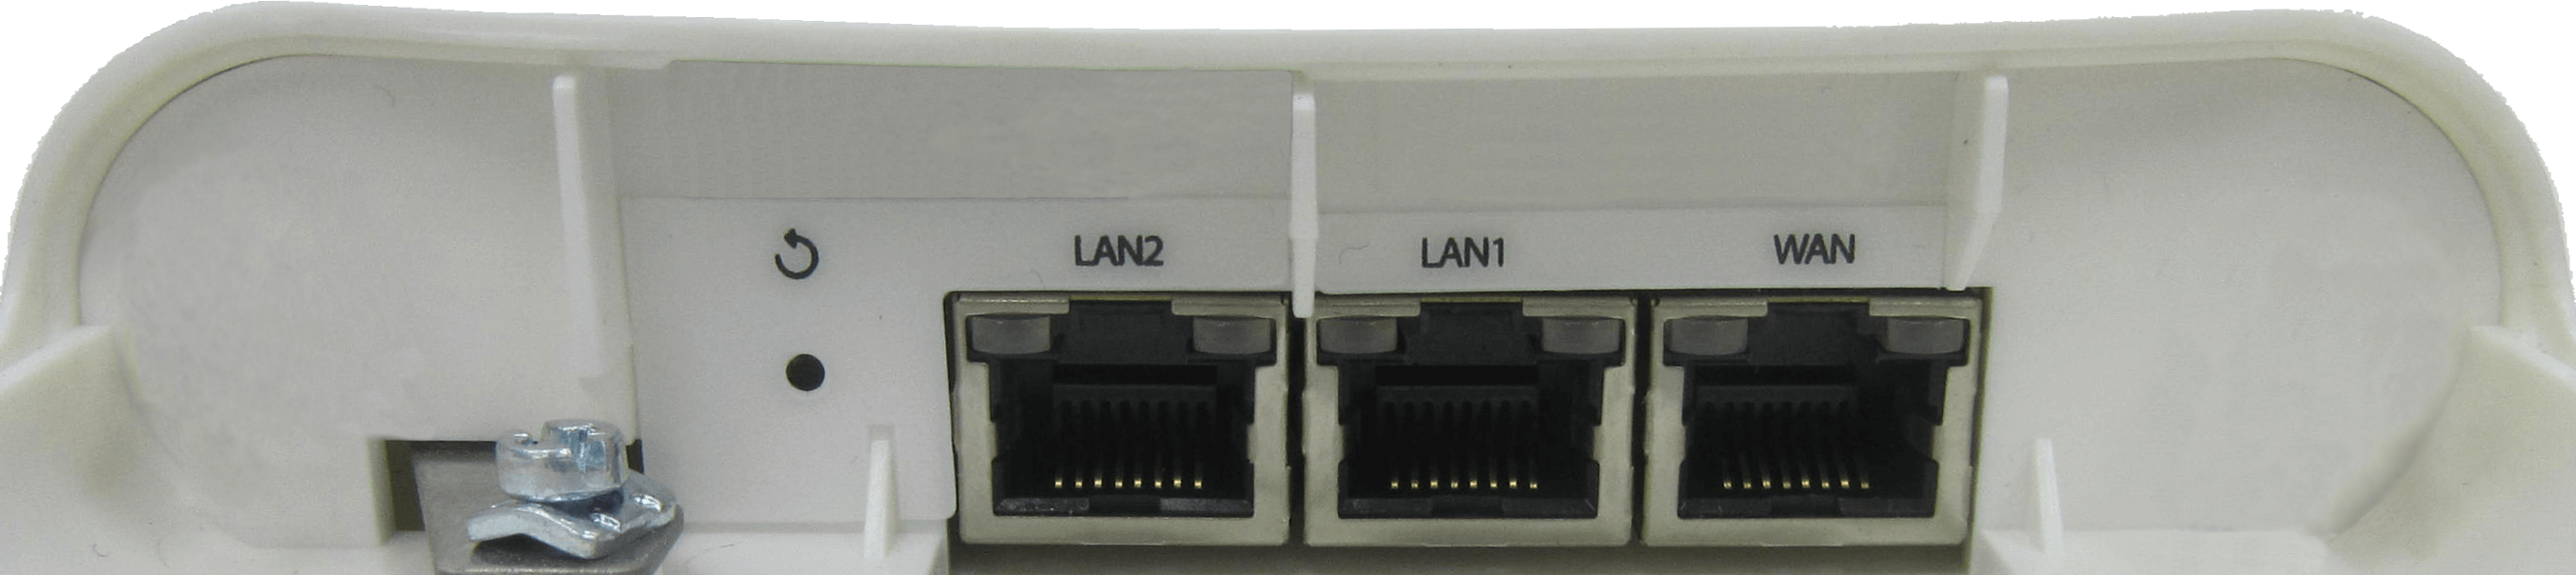 Pepwave Device Connector IP55 panel